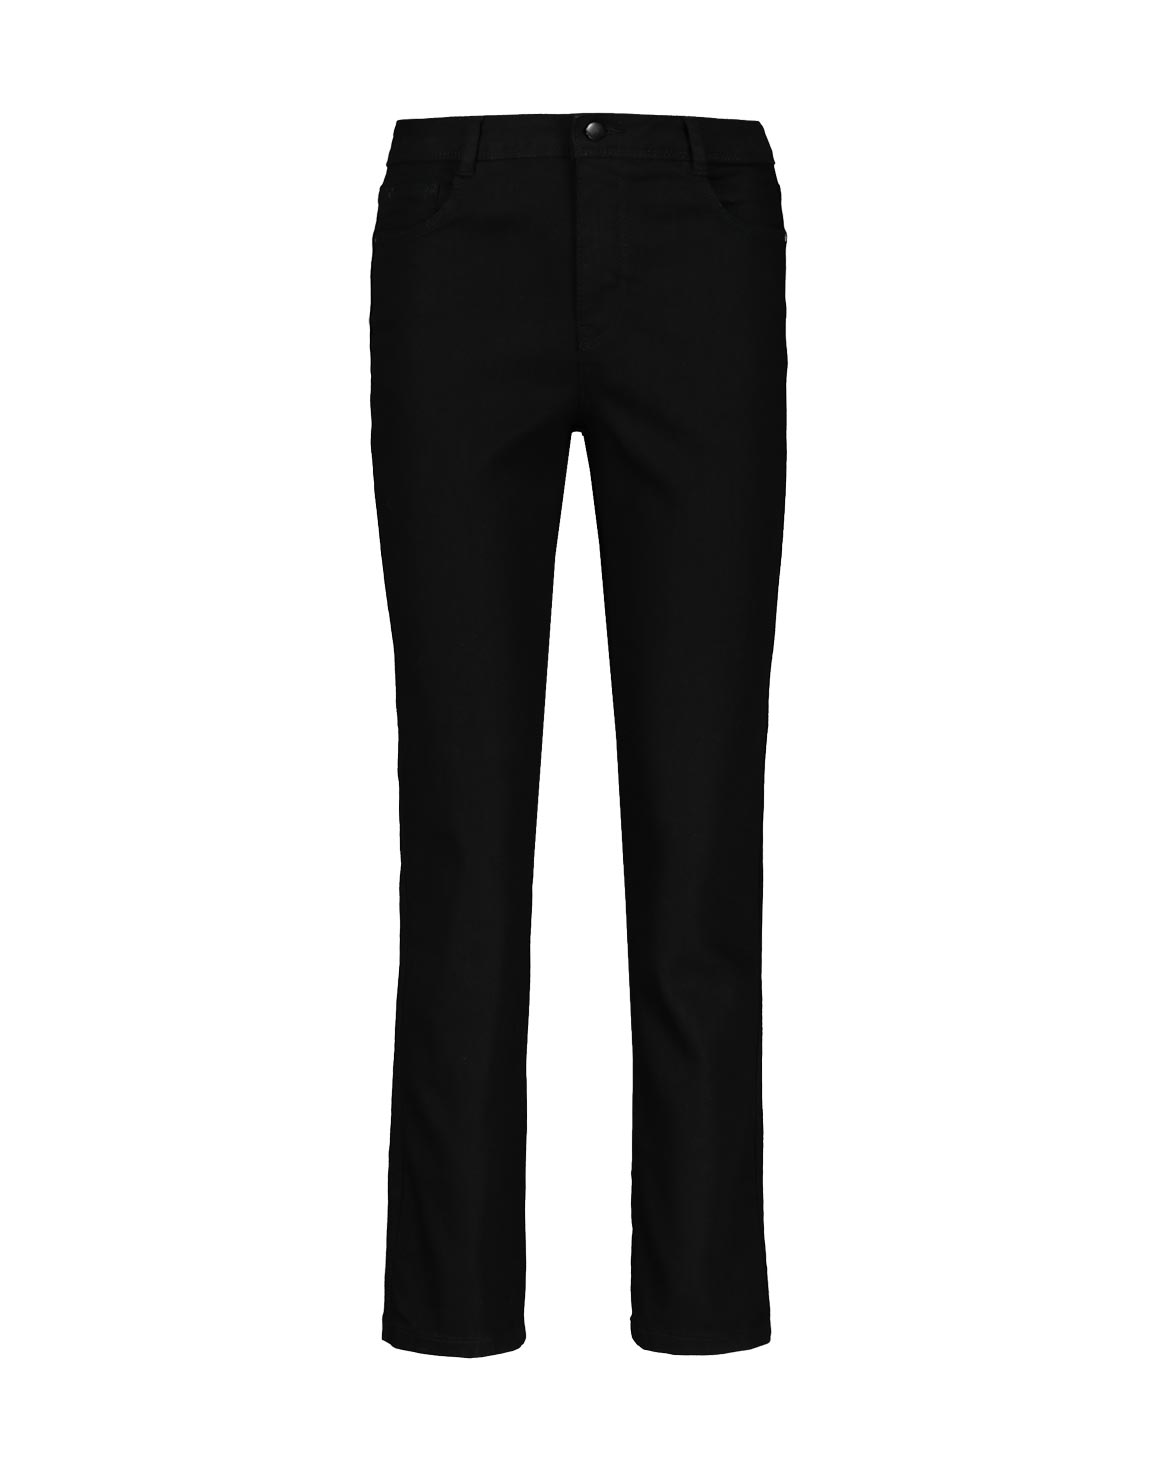 Black Straight Leg Jeans | Woolworths.co.za